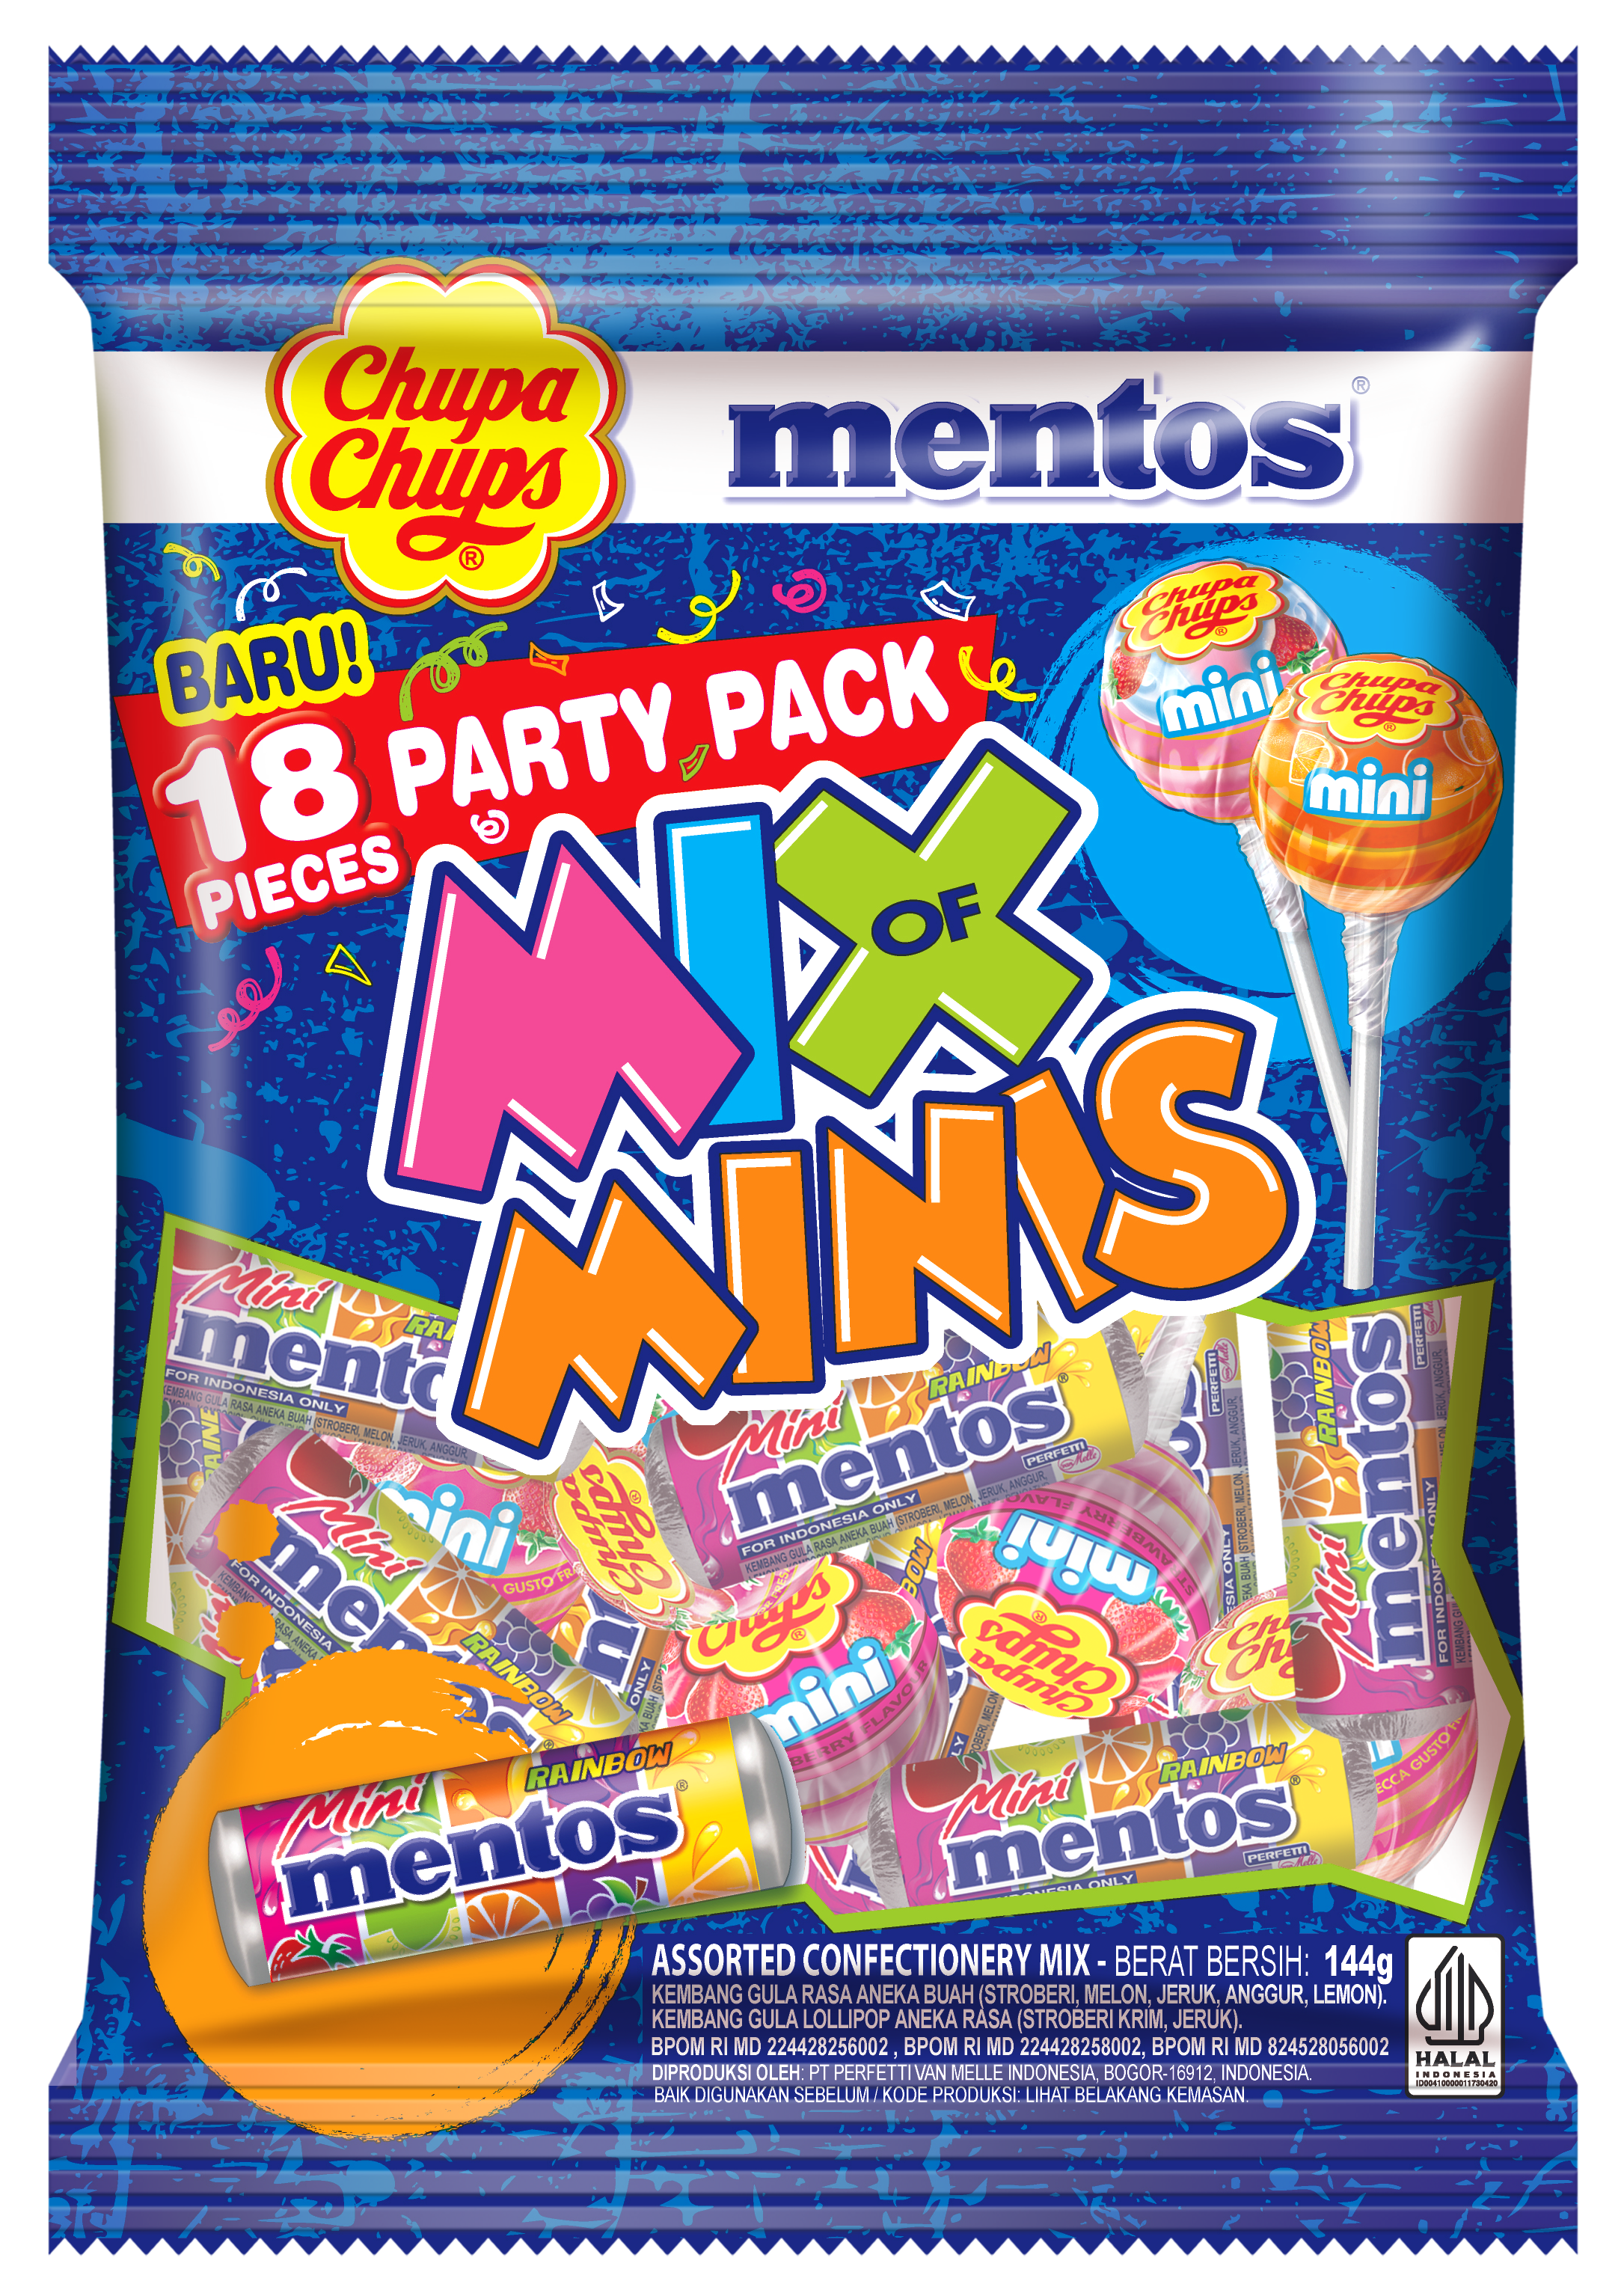 Mentos X Chupa Chups Mix of Minis